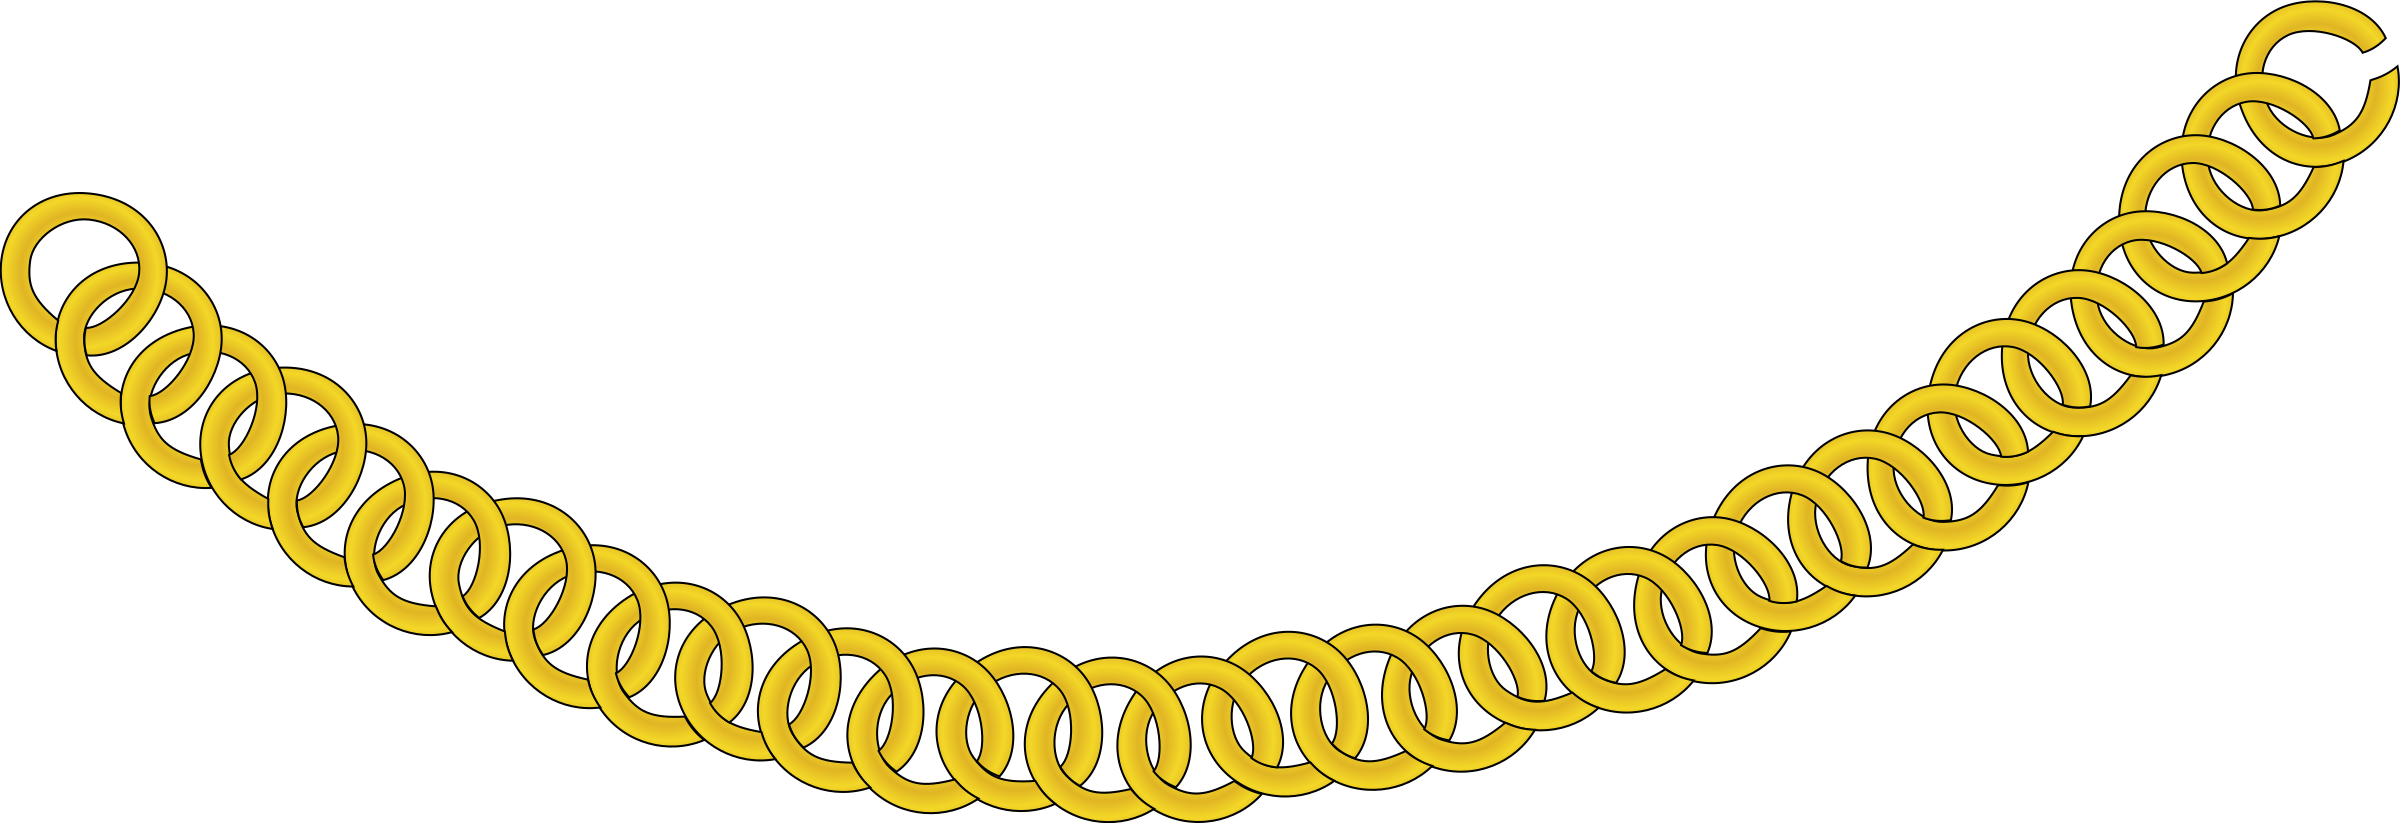 Clipart - gold chain 1